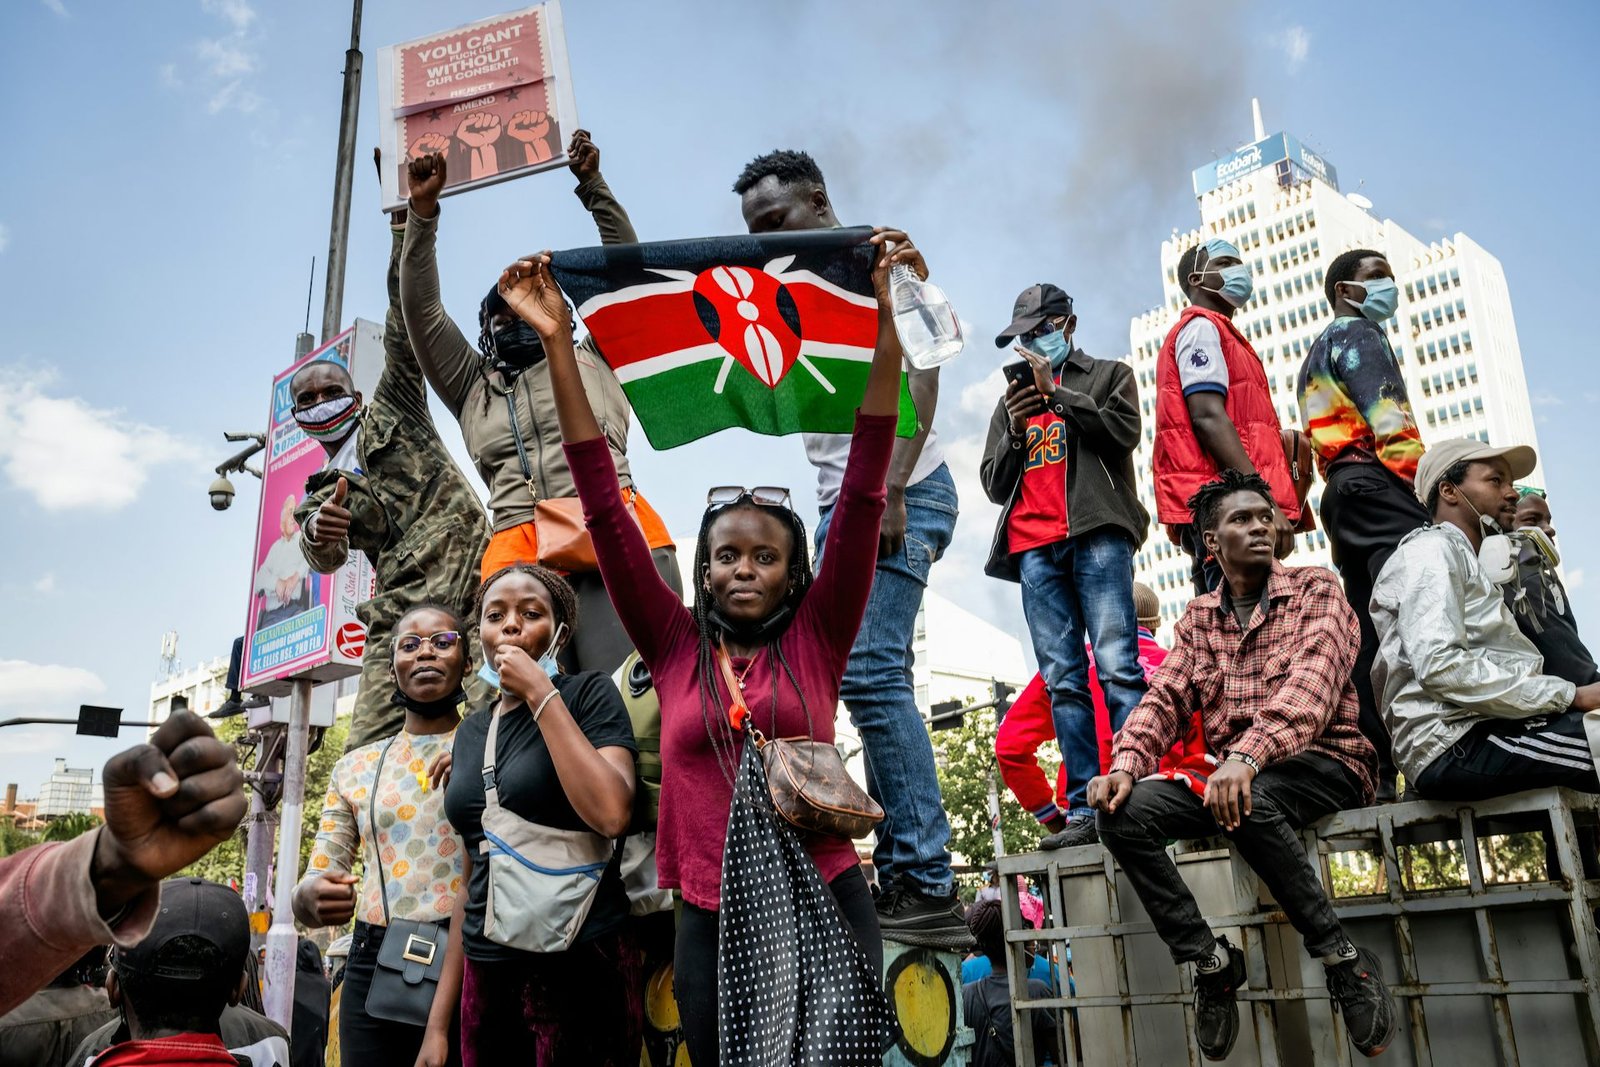 Kenya's Gen Z Revolution: Social Media, Economic Struggles, and the Changing Face of Protest